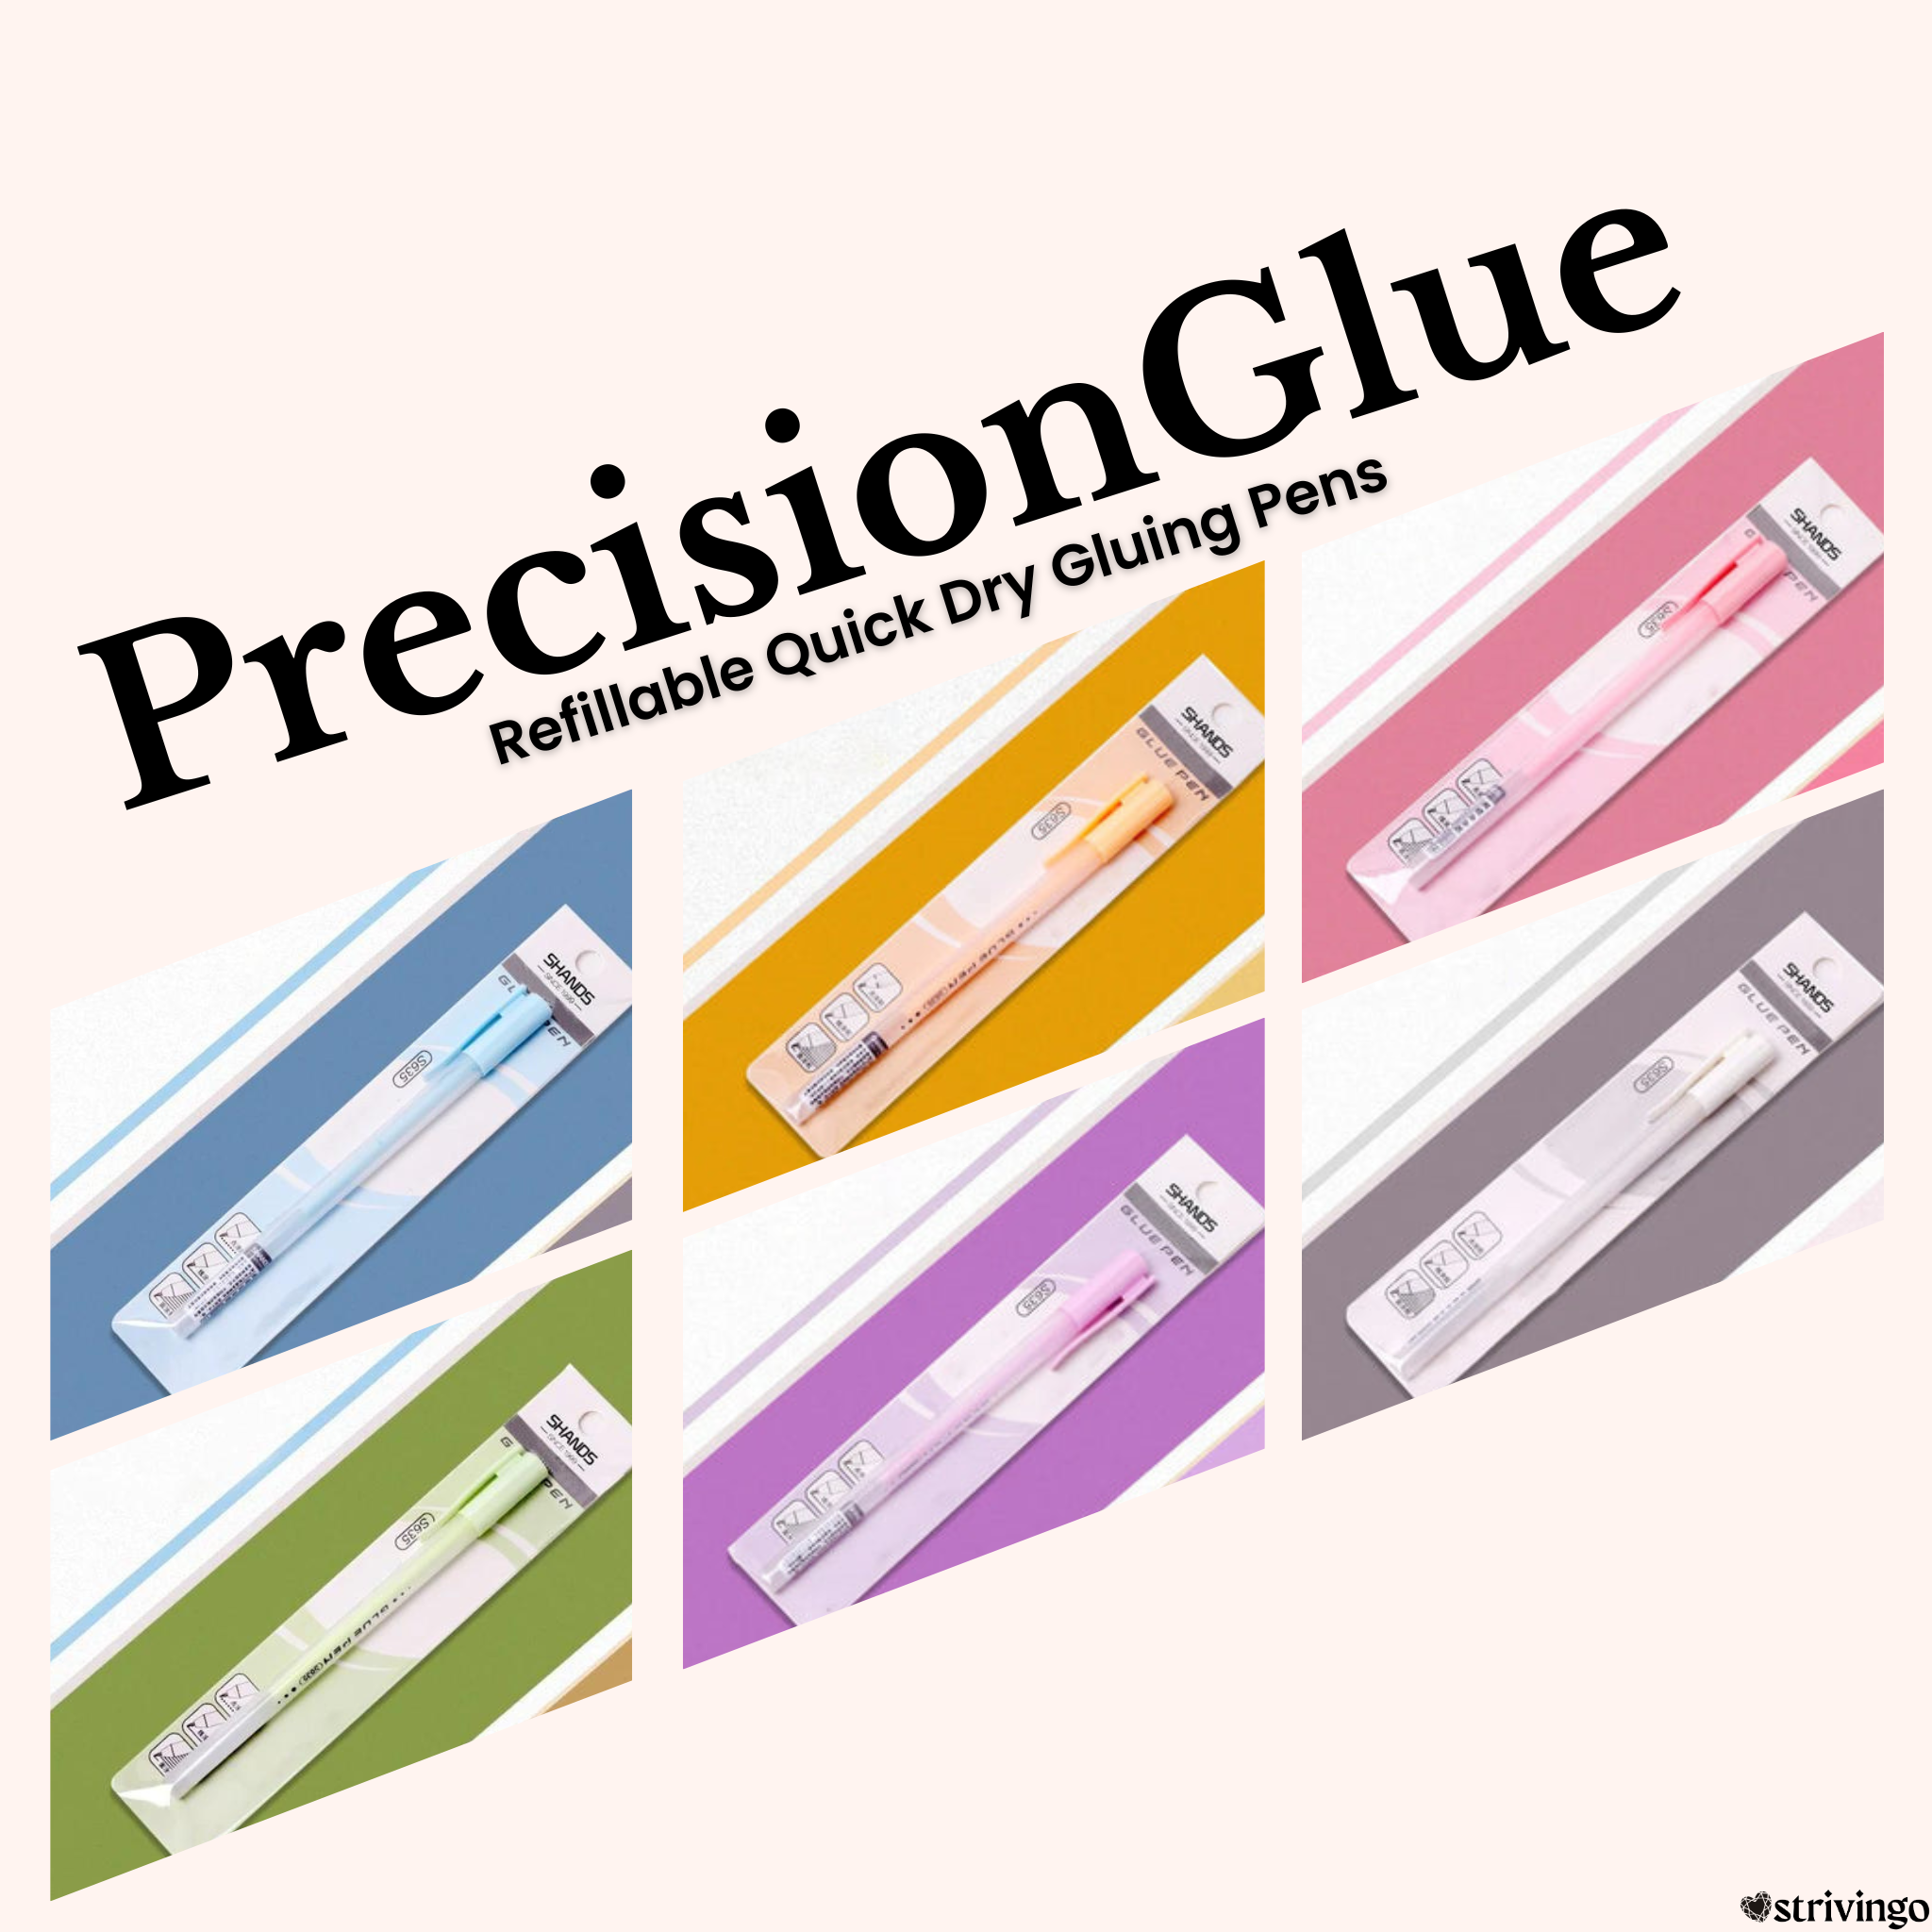 PrecisionGlue Refillable Roller Tip Gluing Pens